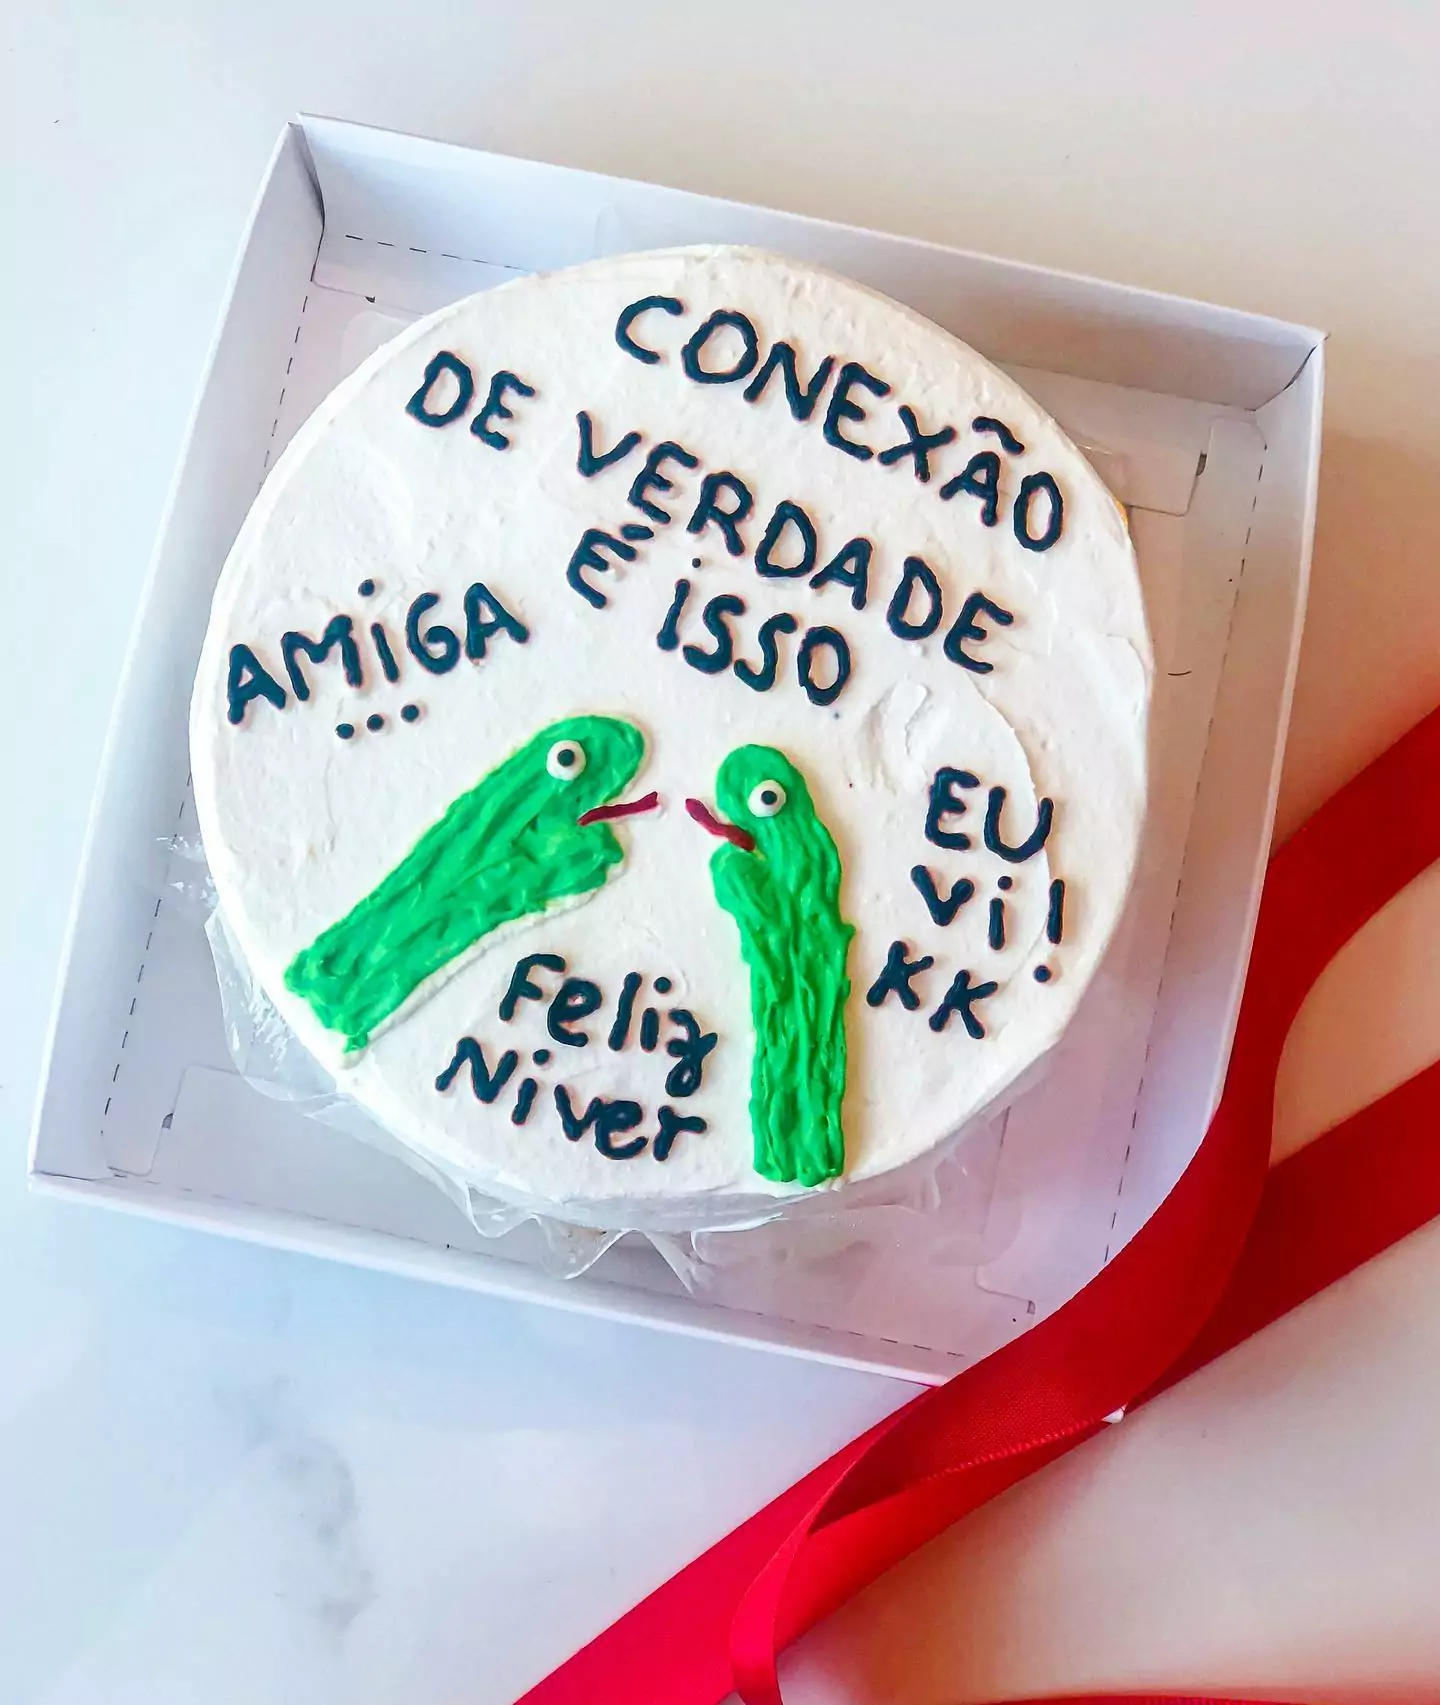 Bentô cake: o minibolo que parece meme impulsiona as vendas de confeiteiros  - Revista Celebridades